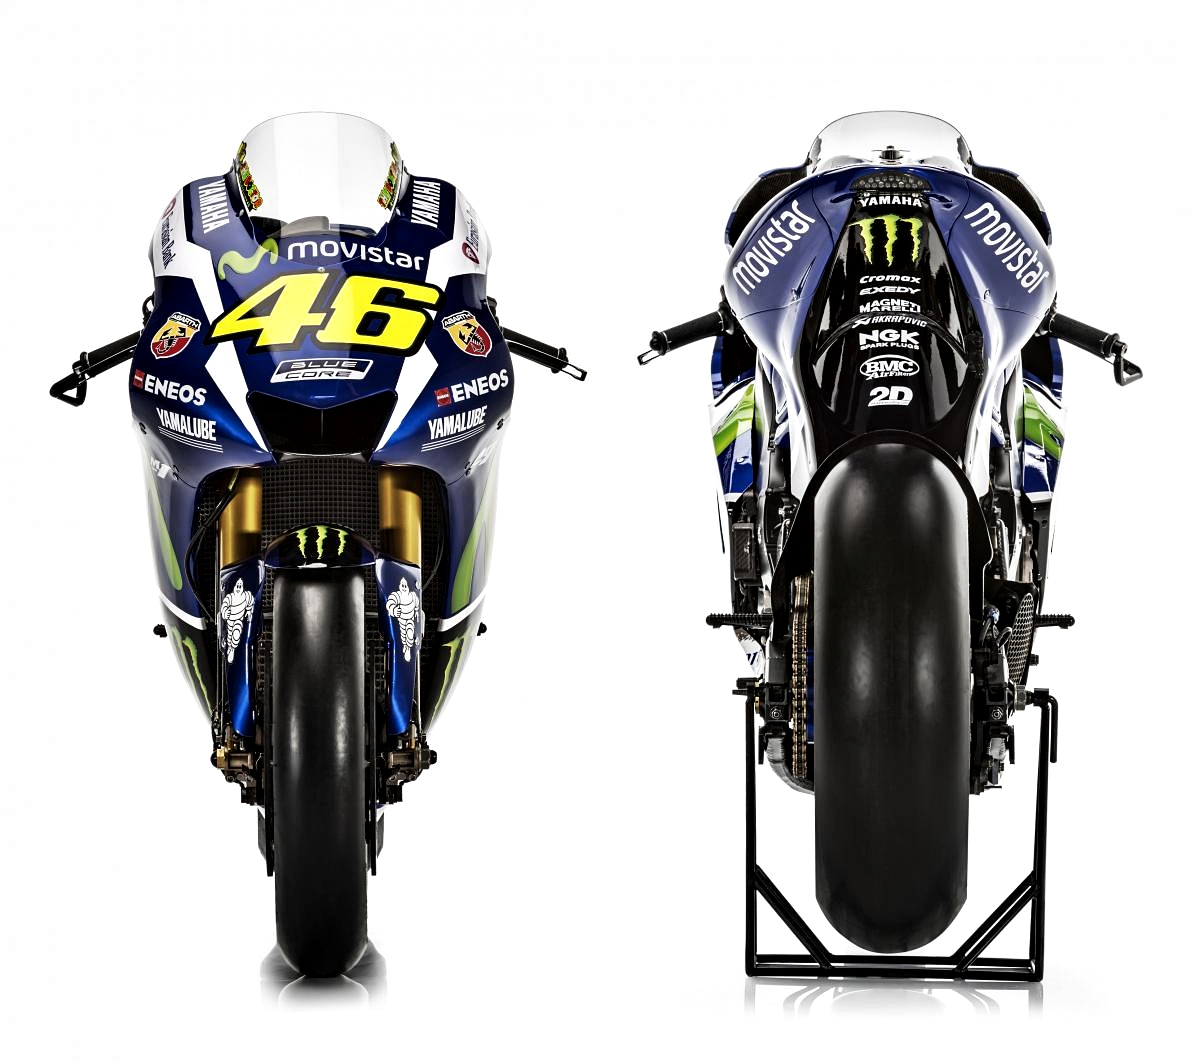 Gallery Foto Valentino Rossi Dan Lorenzo Dengan Motor Yamaha YZR